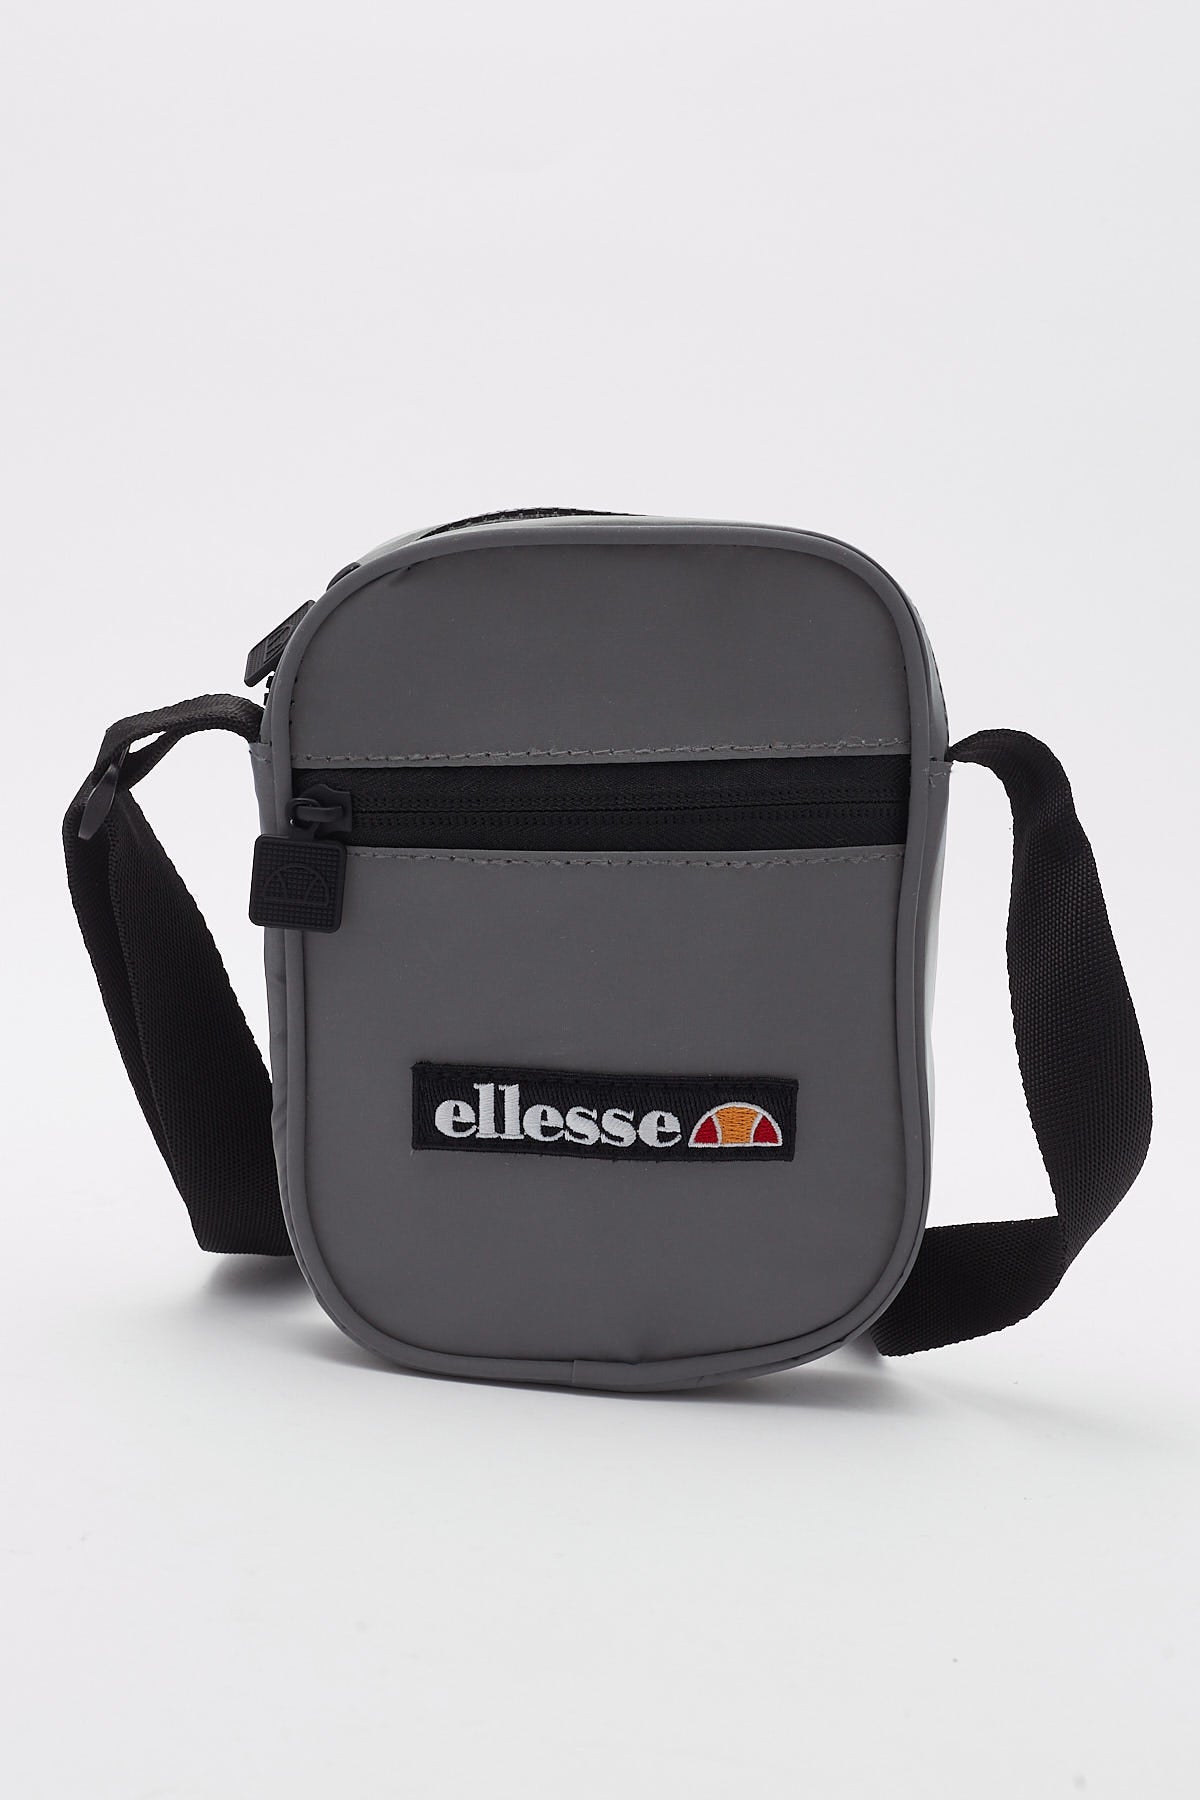 Ellesse Tazza Small Item Bag Reflective